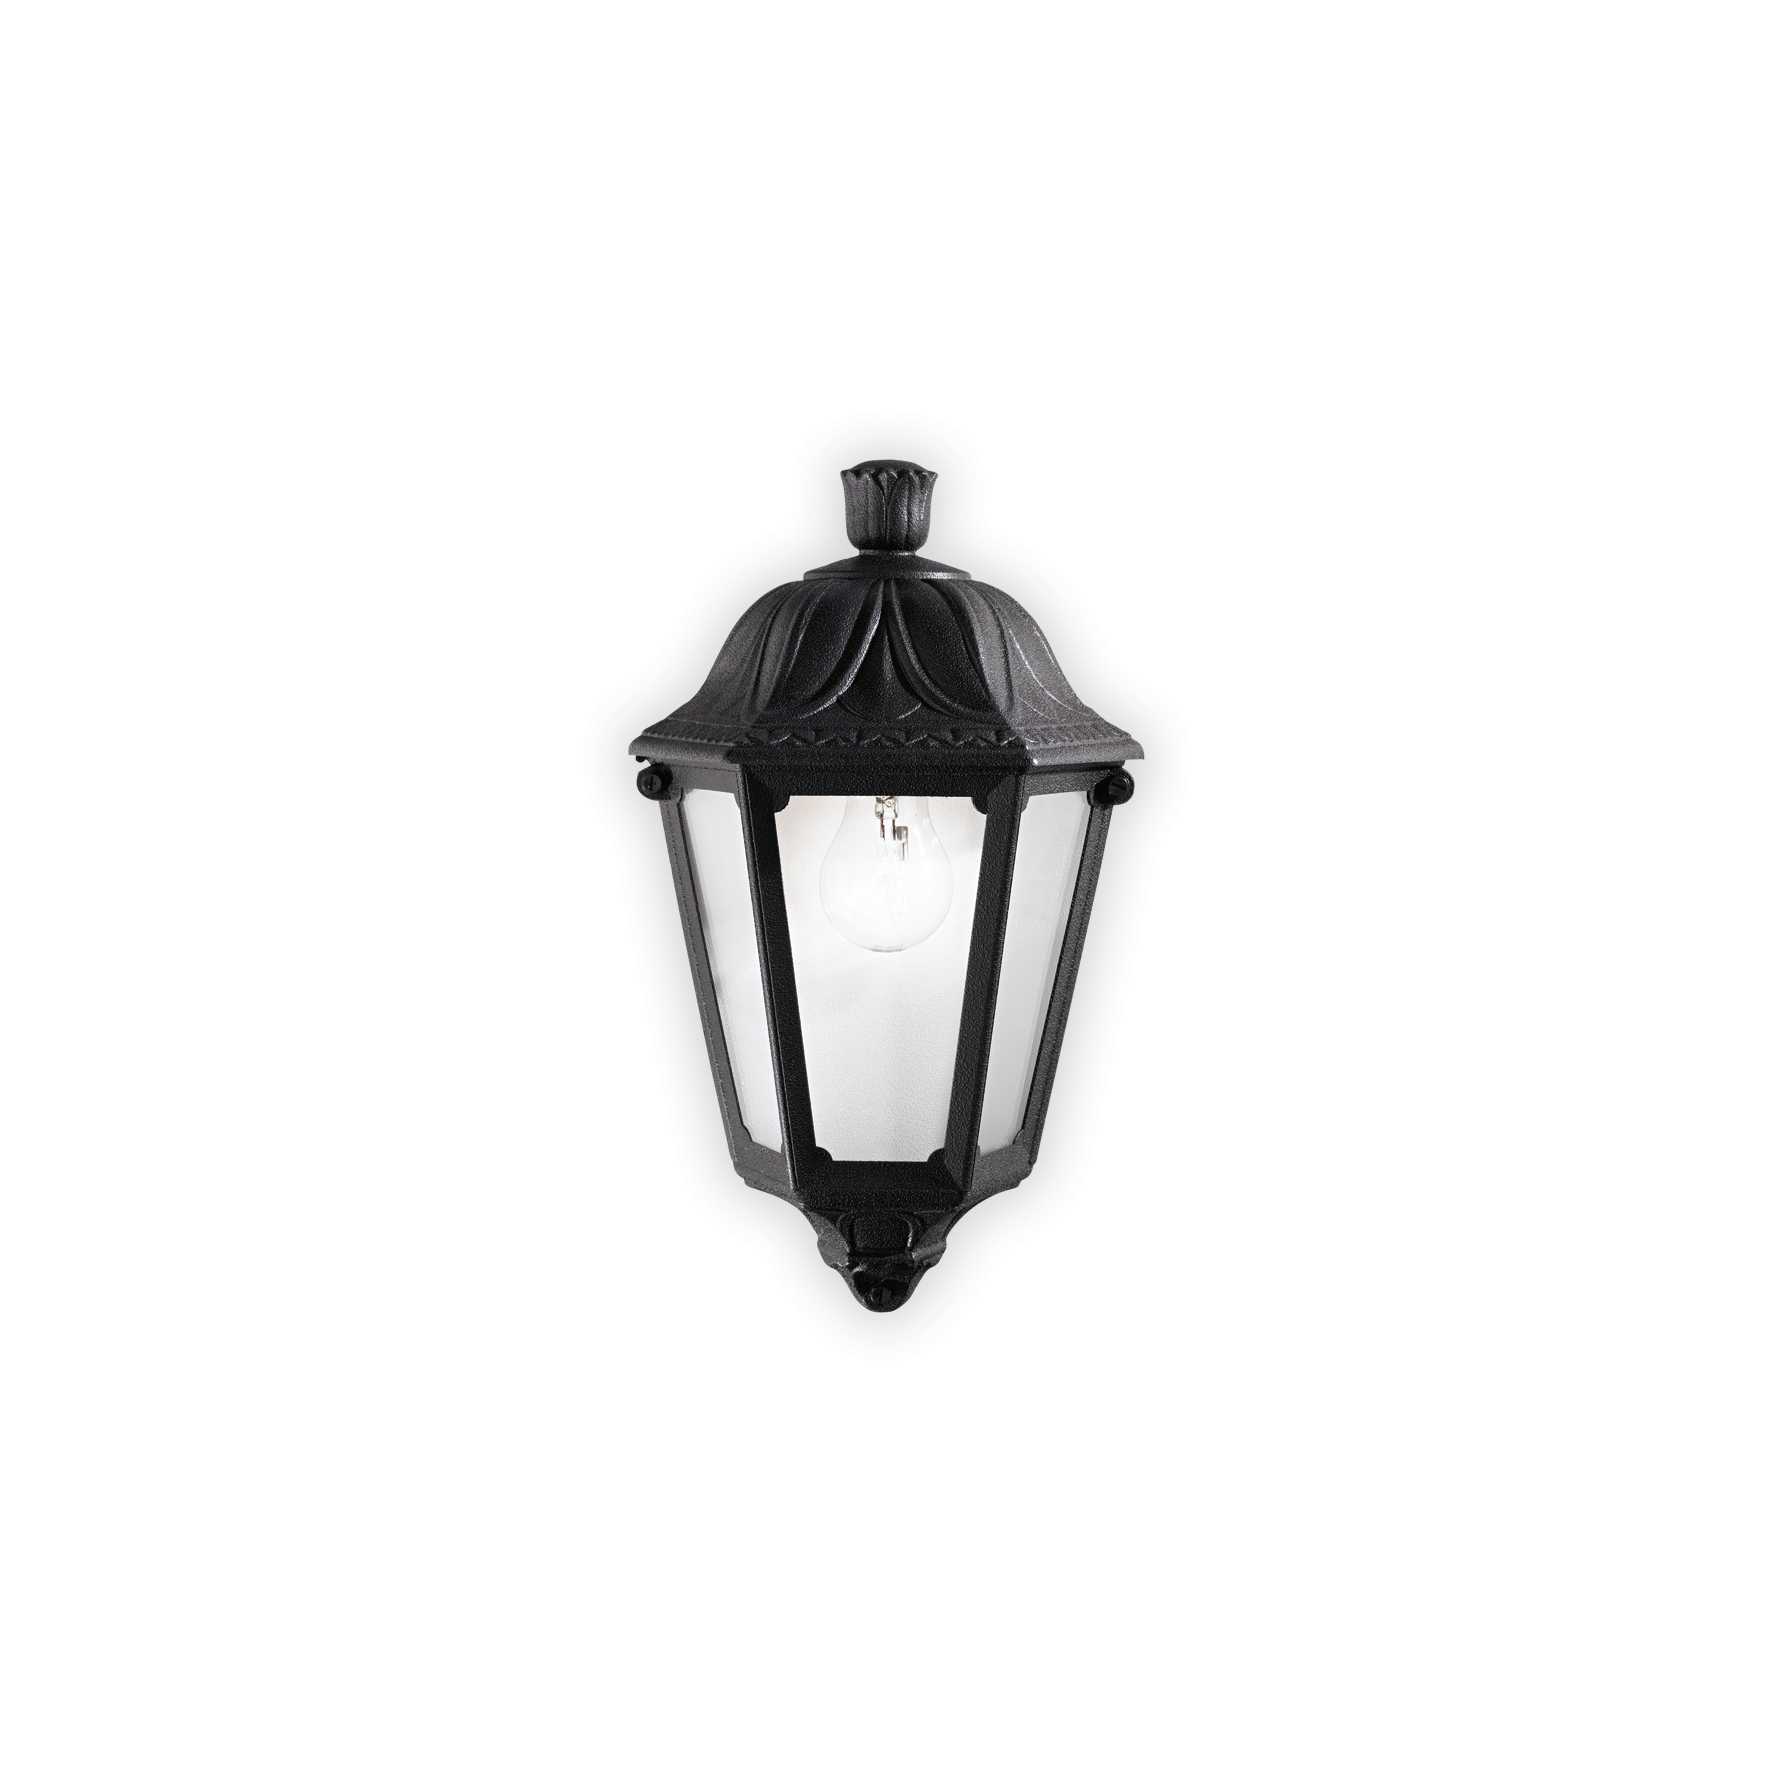 AD hotelska oprema Vanjska zidna lampa Dafne ap1 (mala)- Crne boje slika proizvoda